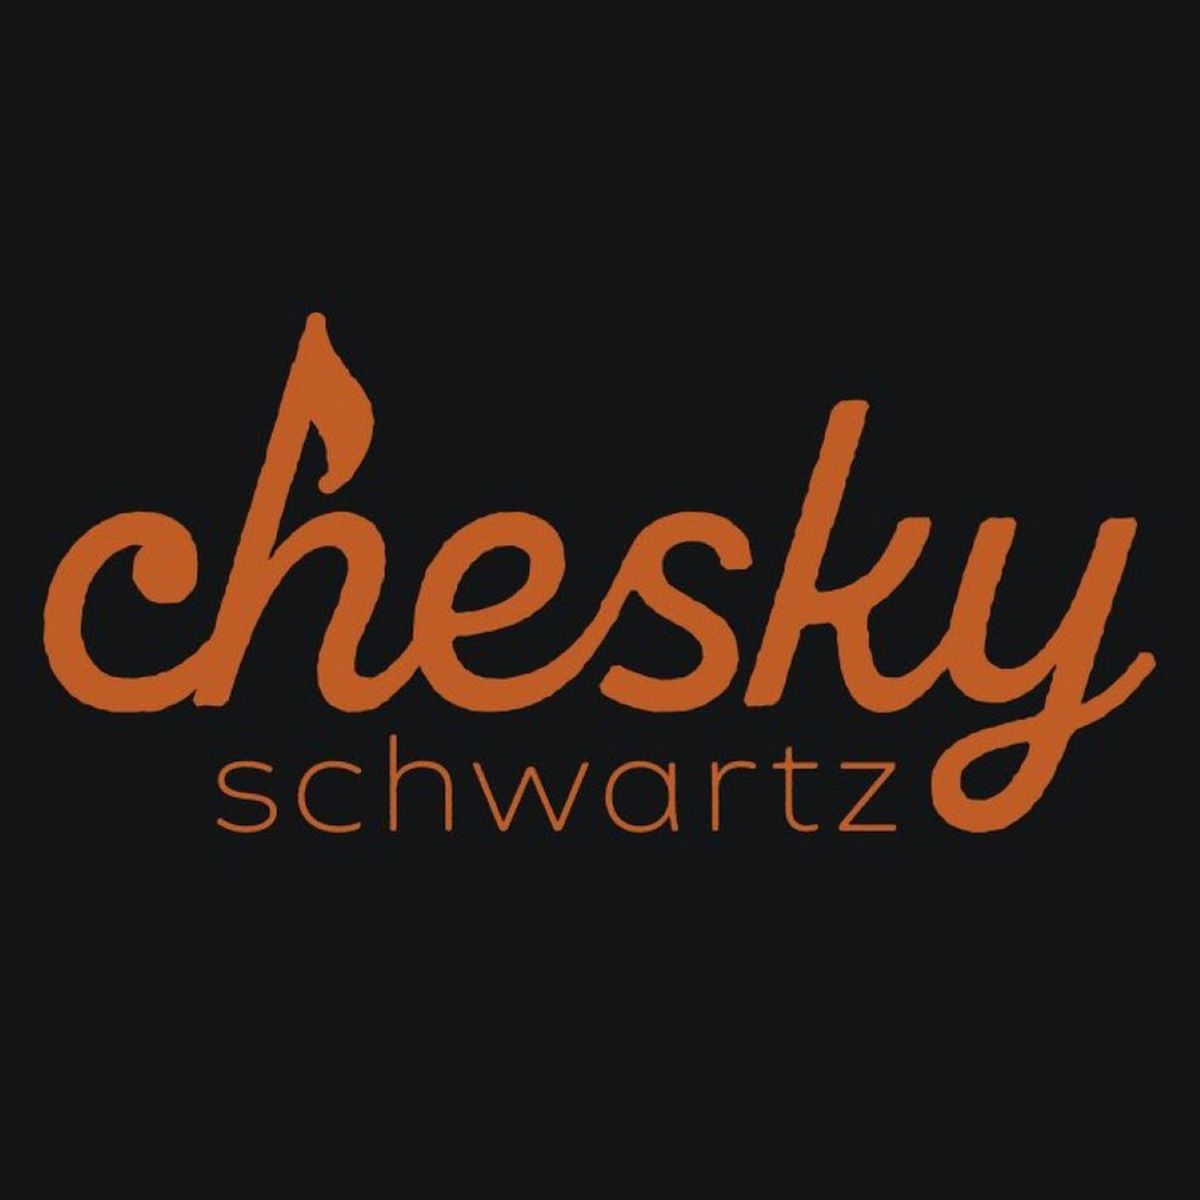 Lipa Schmeltzer & Chesky Schwartz Production June 20 '22